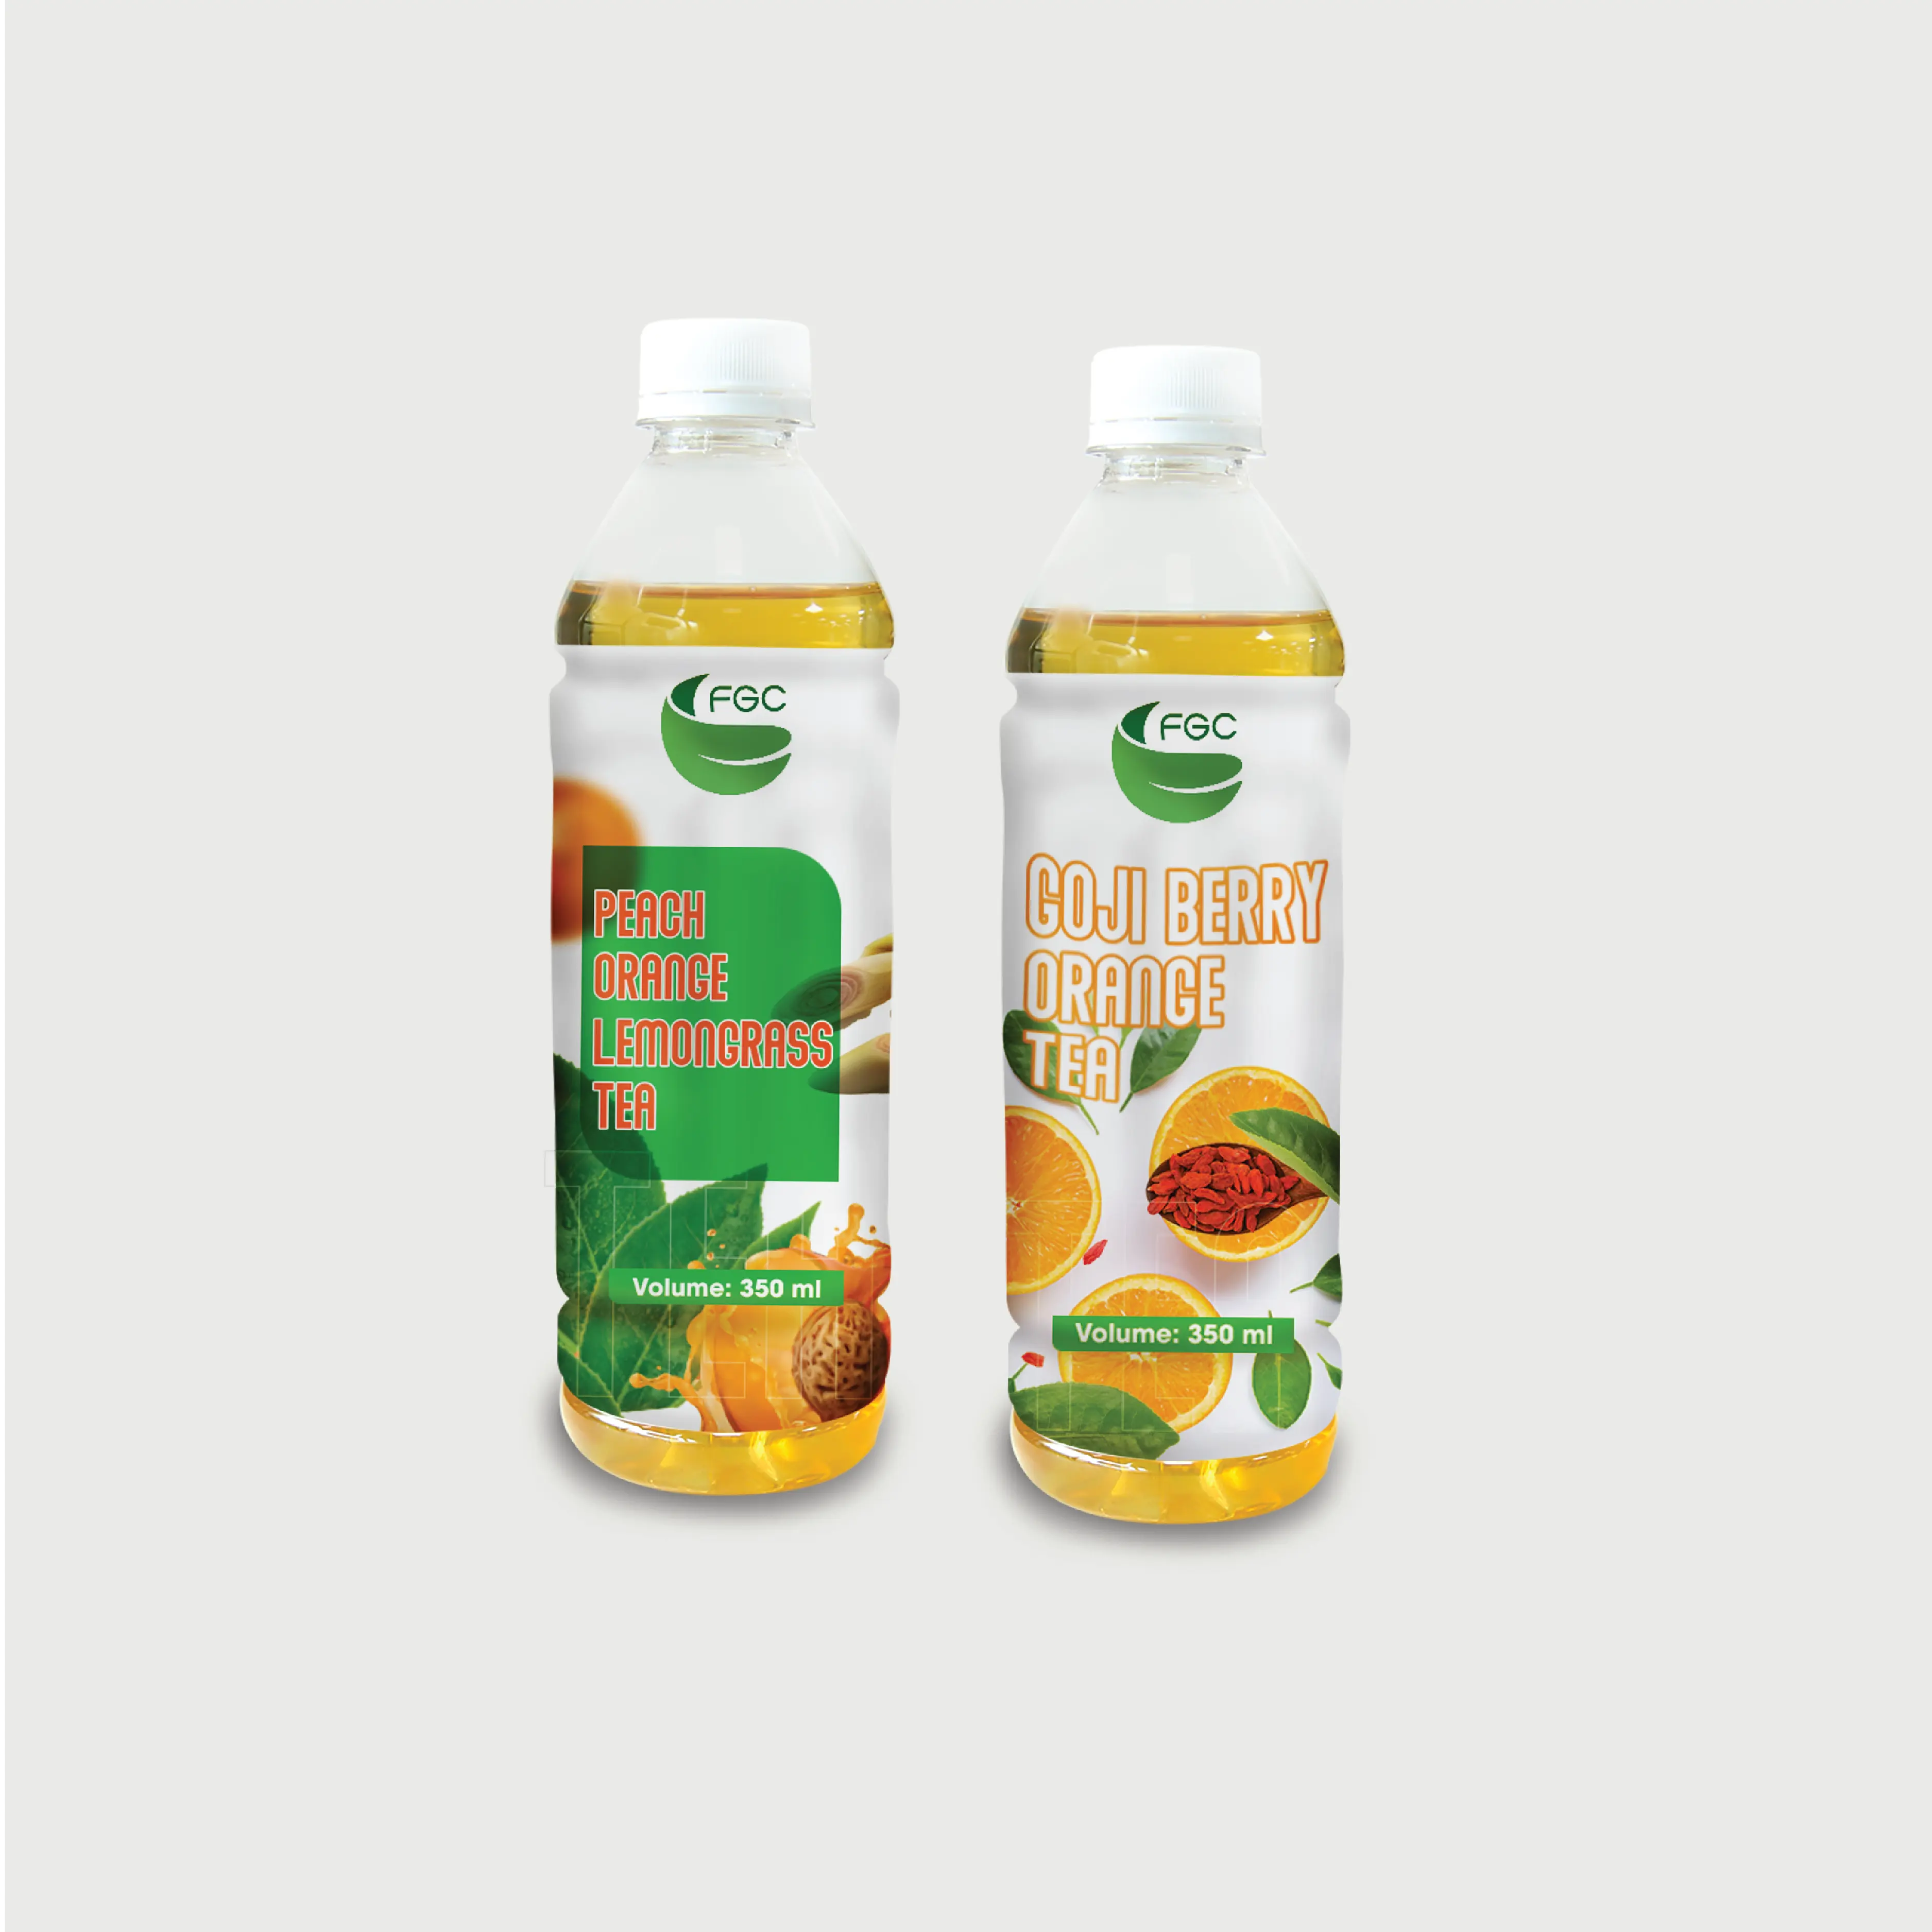 Vietnam products fruit drinks no preservatives tea leaves customization peach orange lemongrass cozy tea goji berries